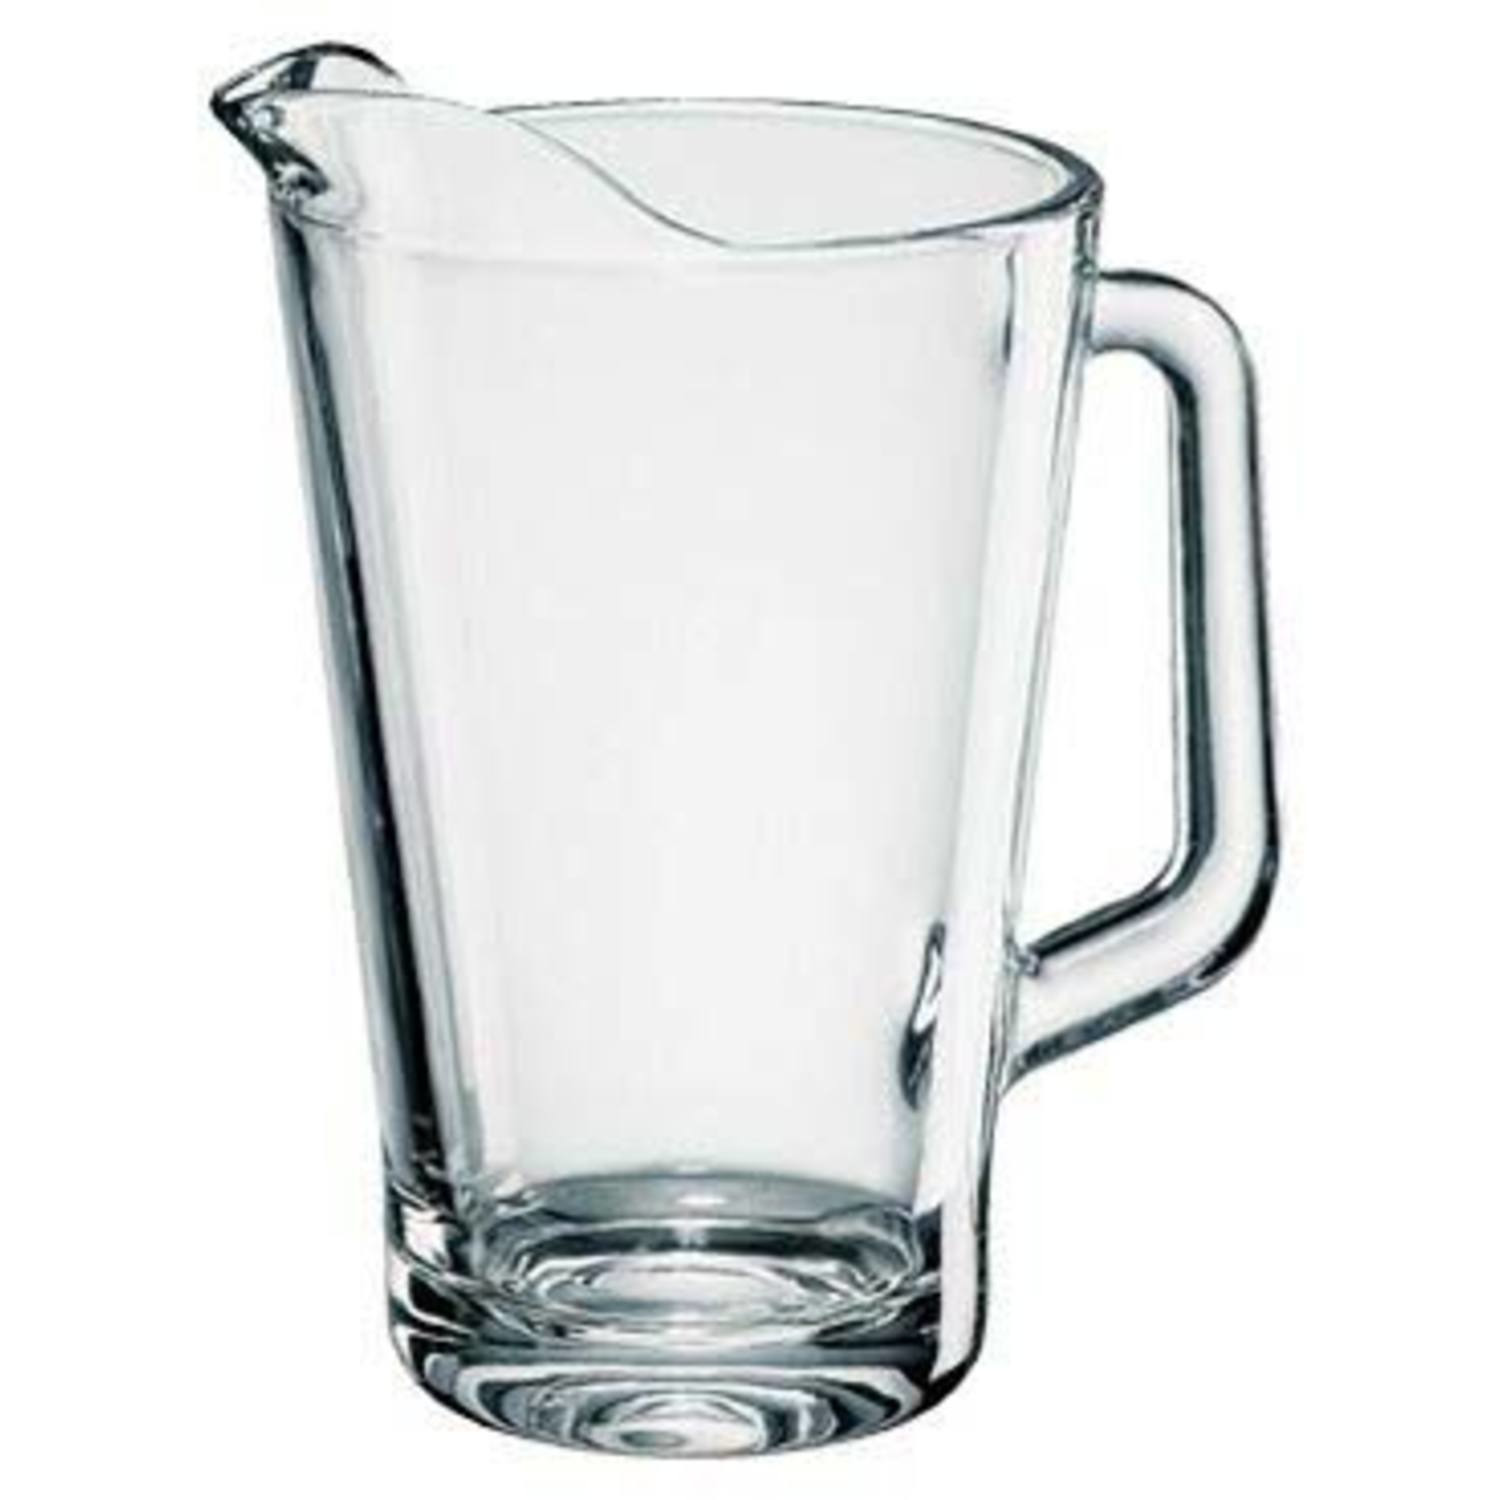 1x Glazen water karaffen-pitchers van 1,5 L Conic